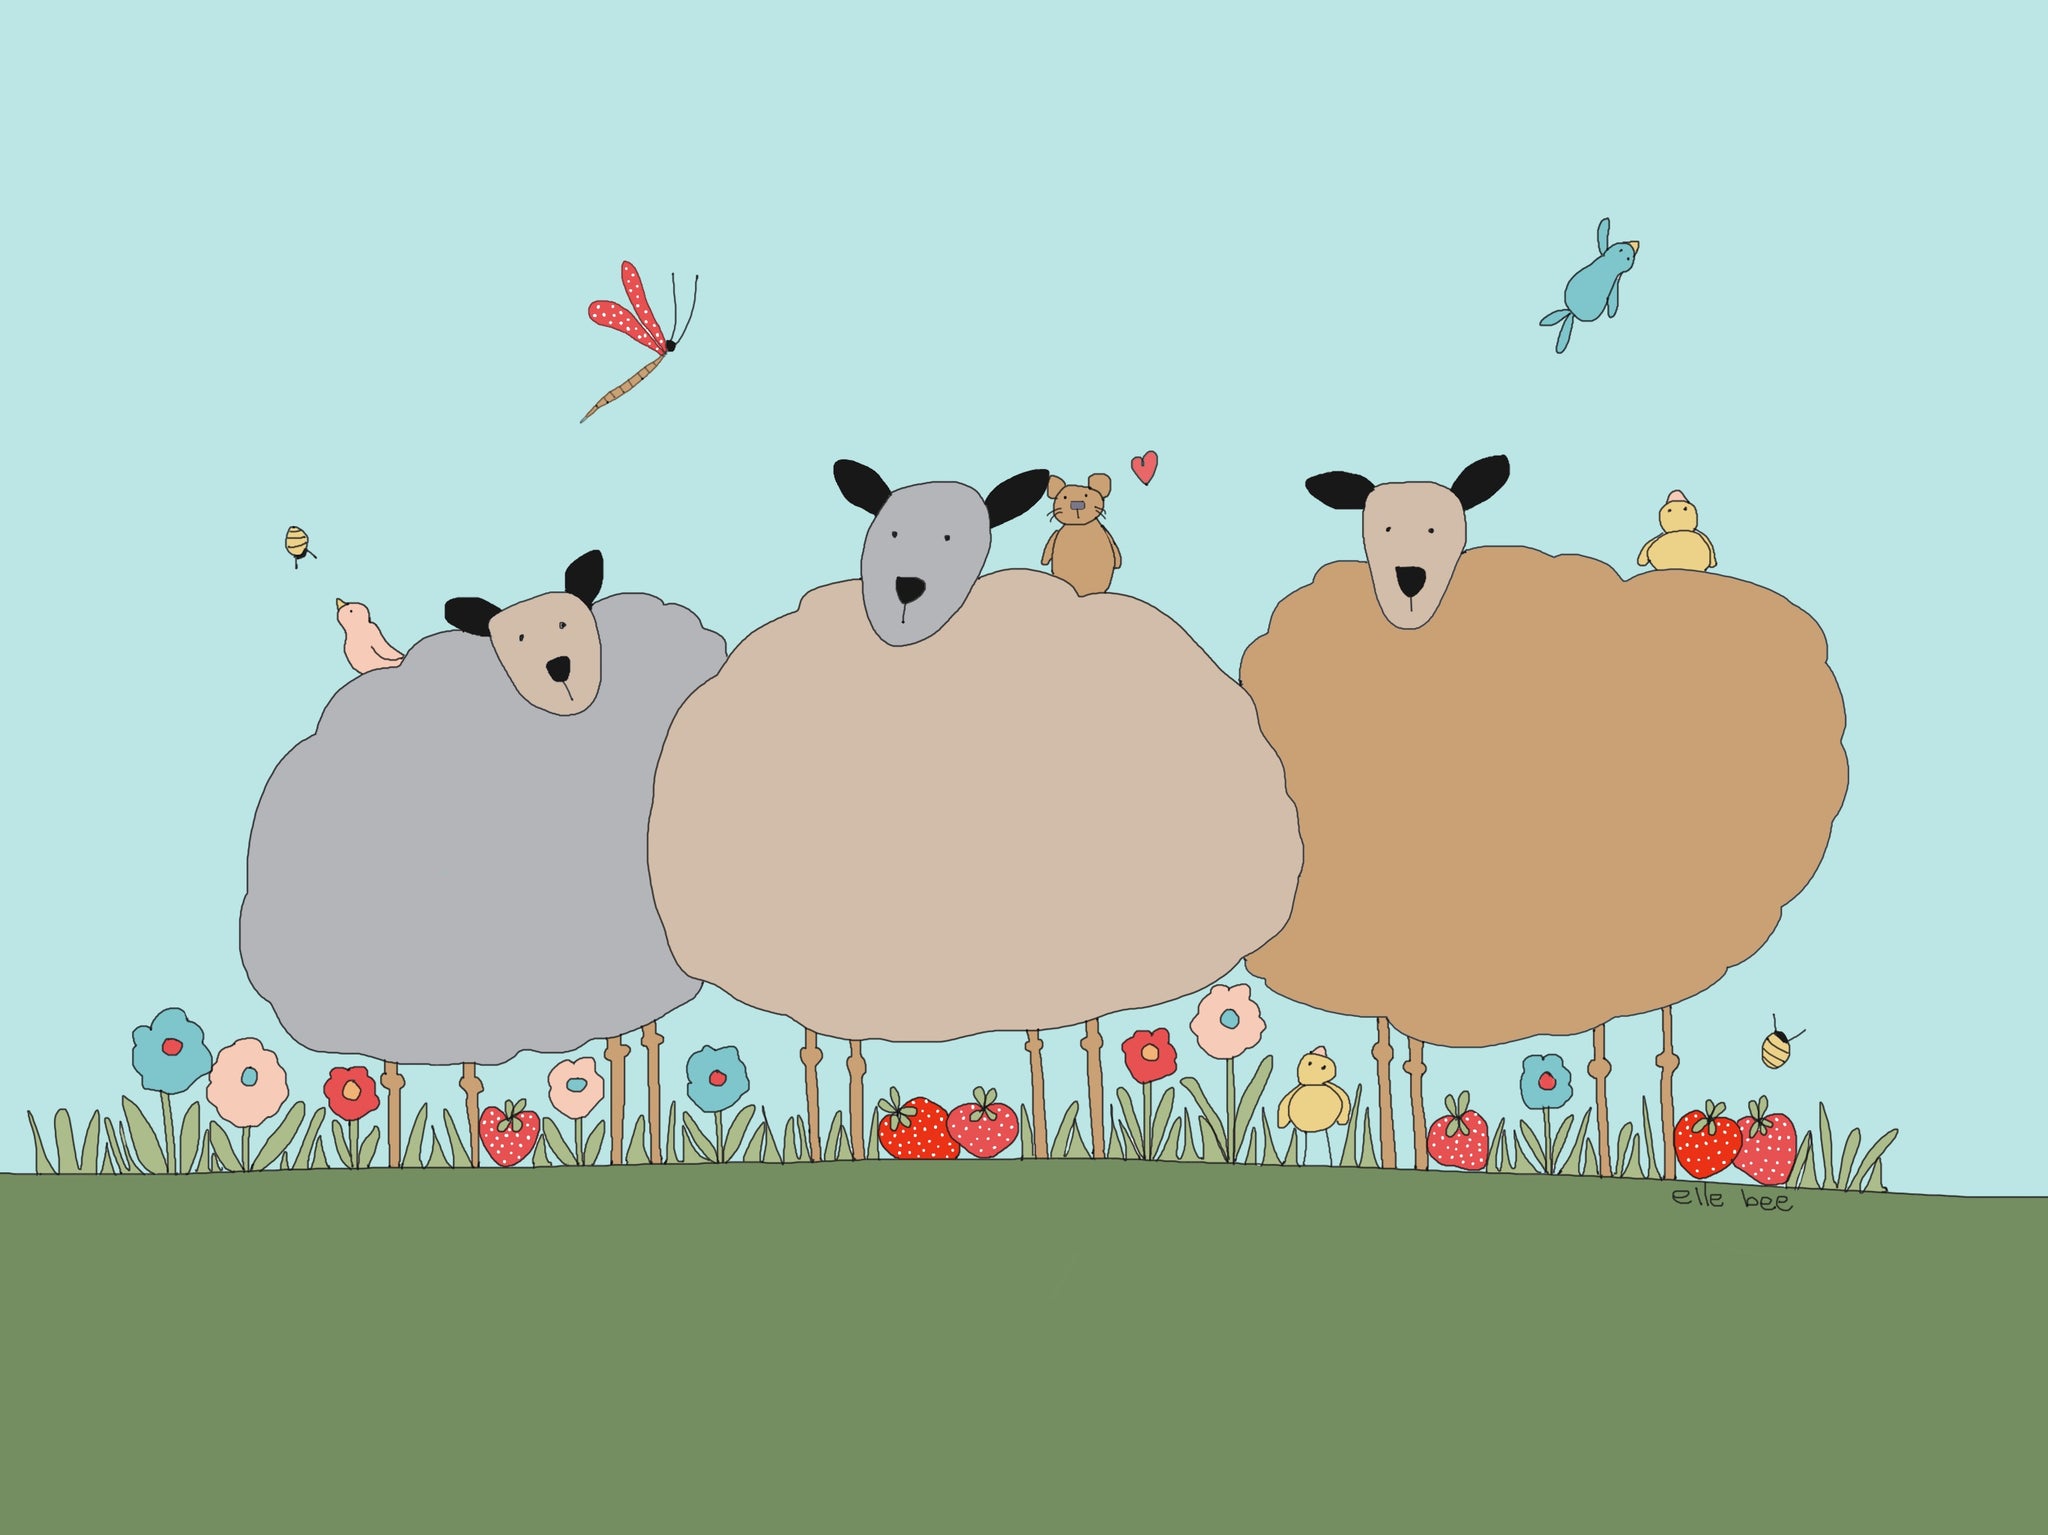 Greeting card "3 fluffy sheep"